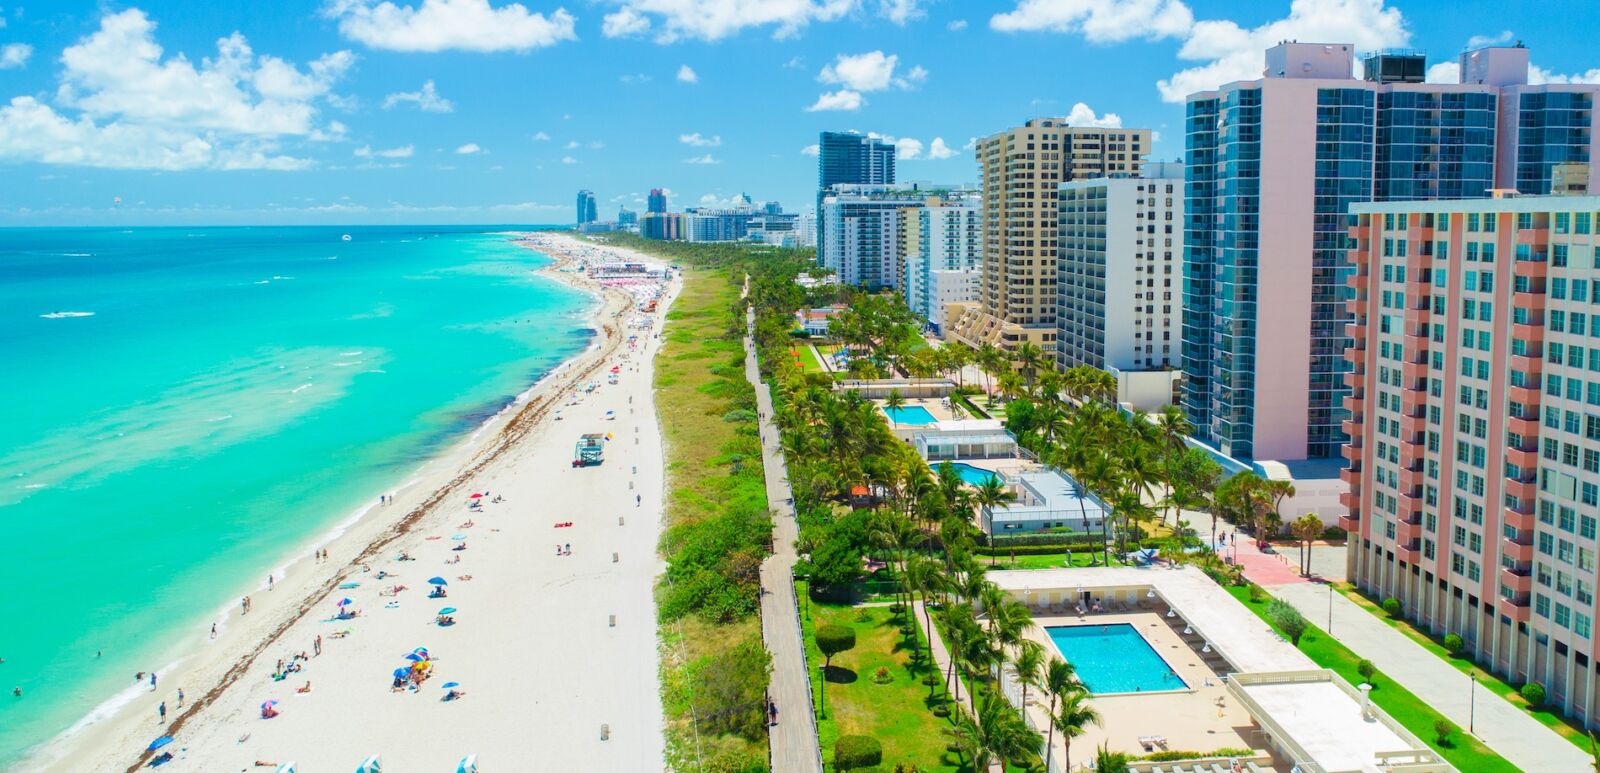 Best beaches in Miami. Photo via Shutterstock.